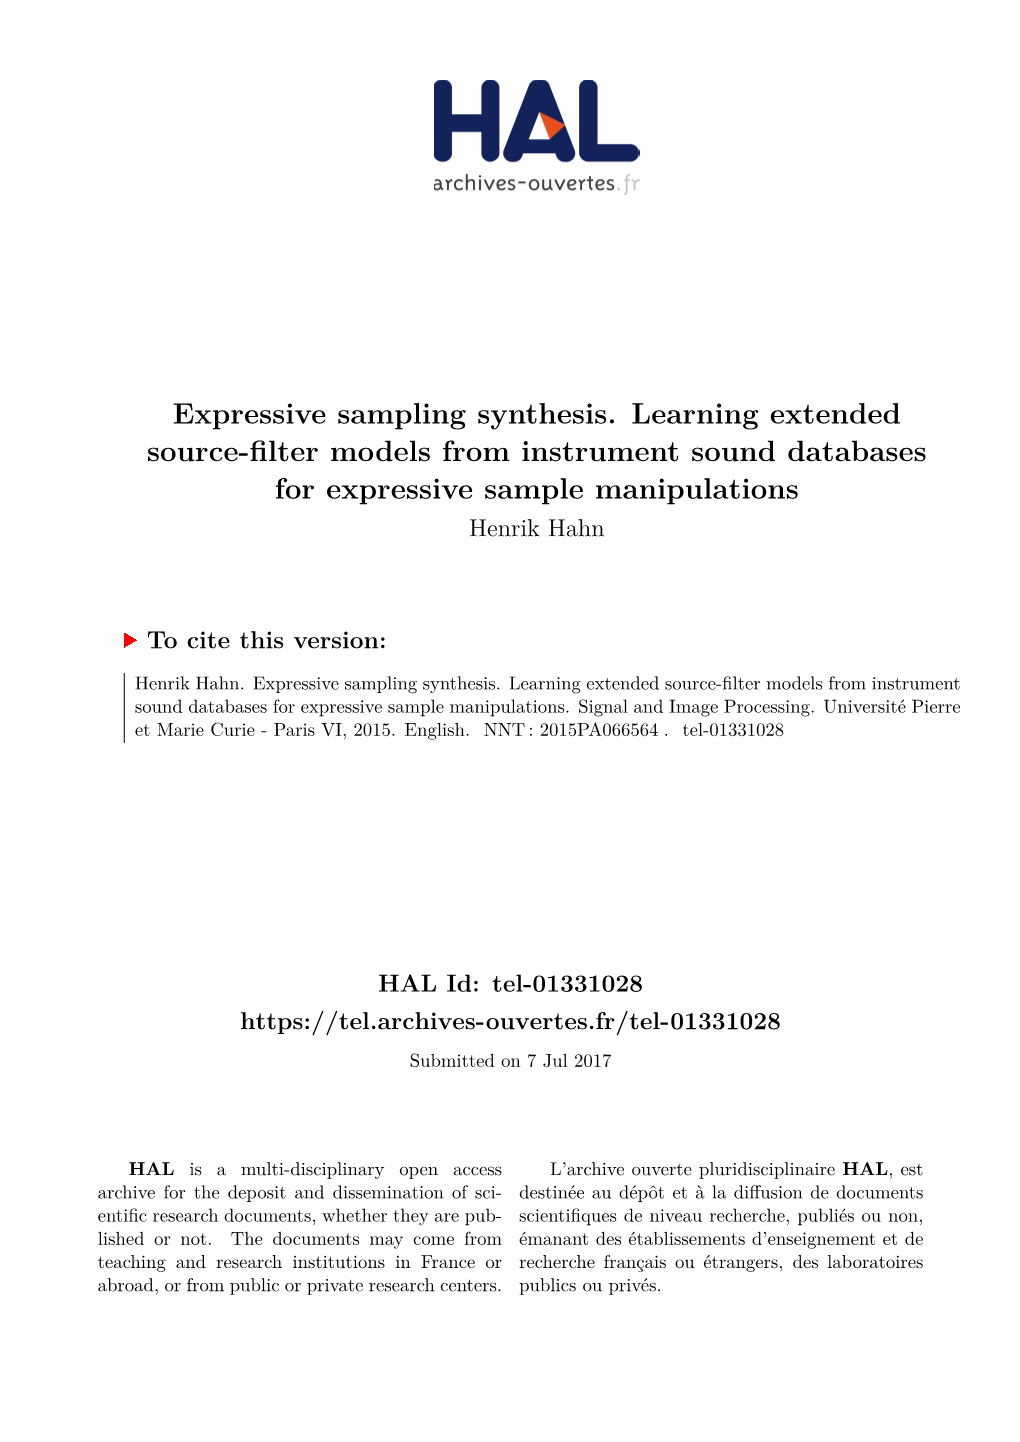 Expressive Sampling Synthesis. Learning Extended Source-Filter Models from Instrument Sound Databases for Expressive Sample Manipulations Henrik Hahn